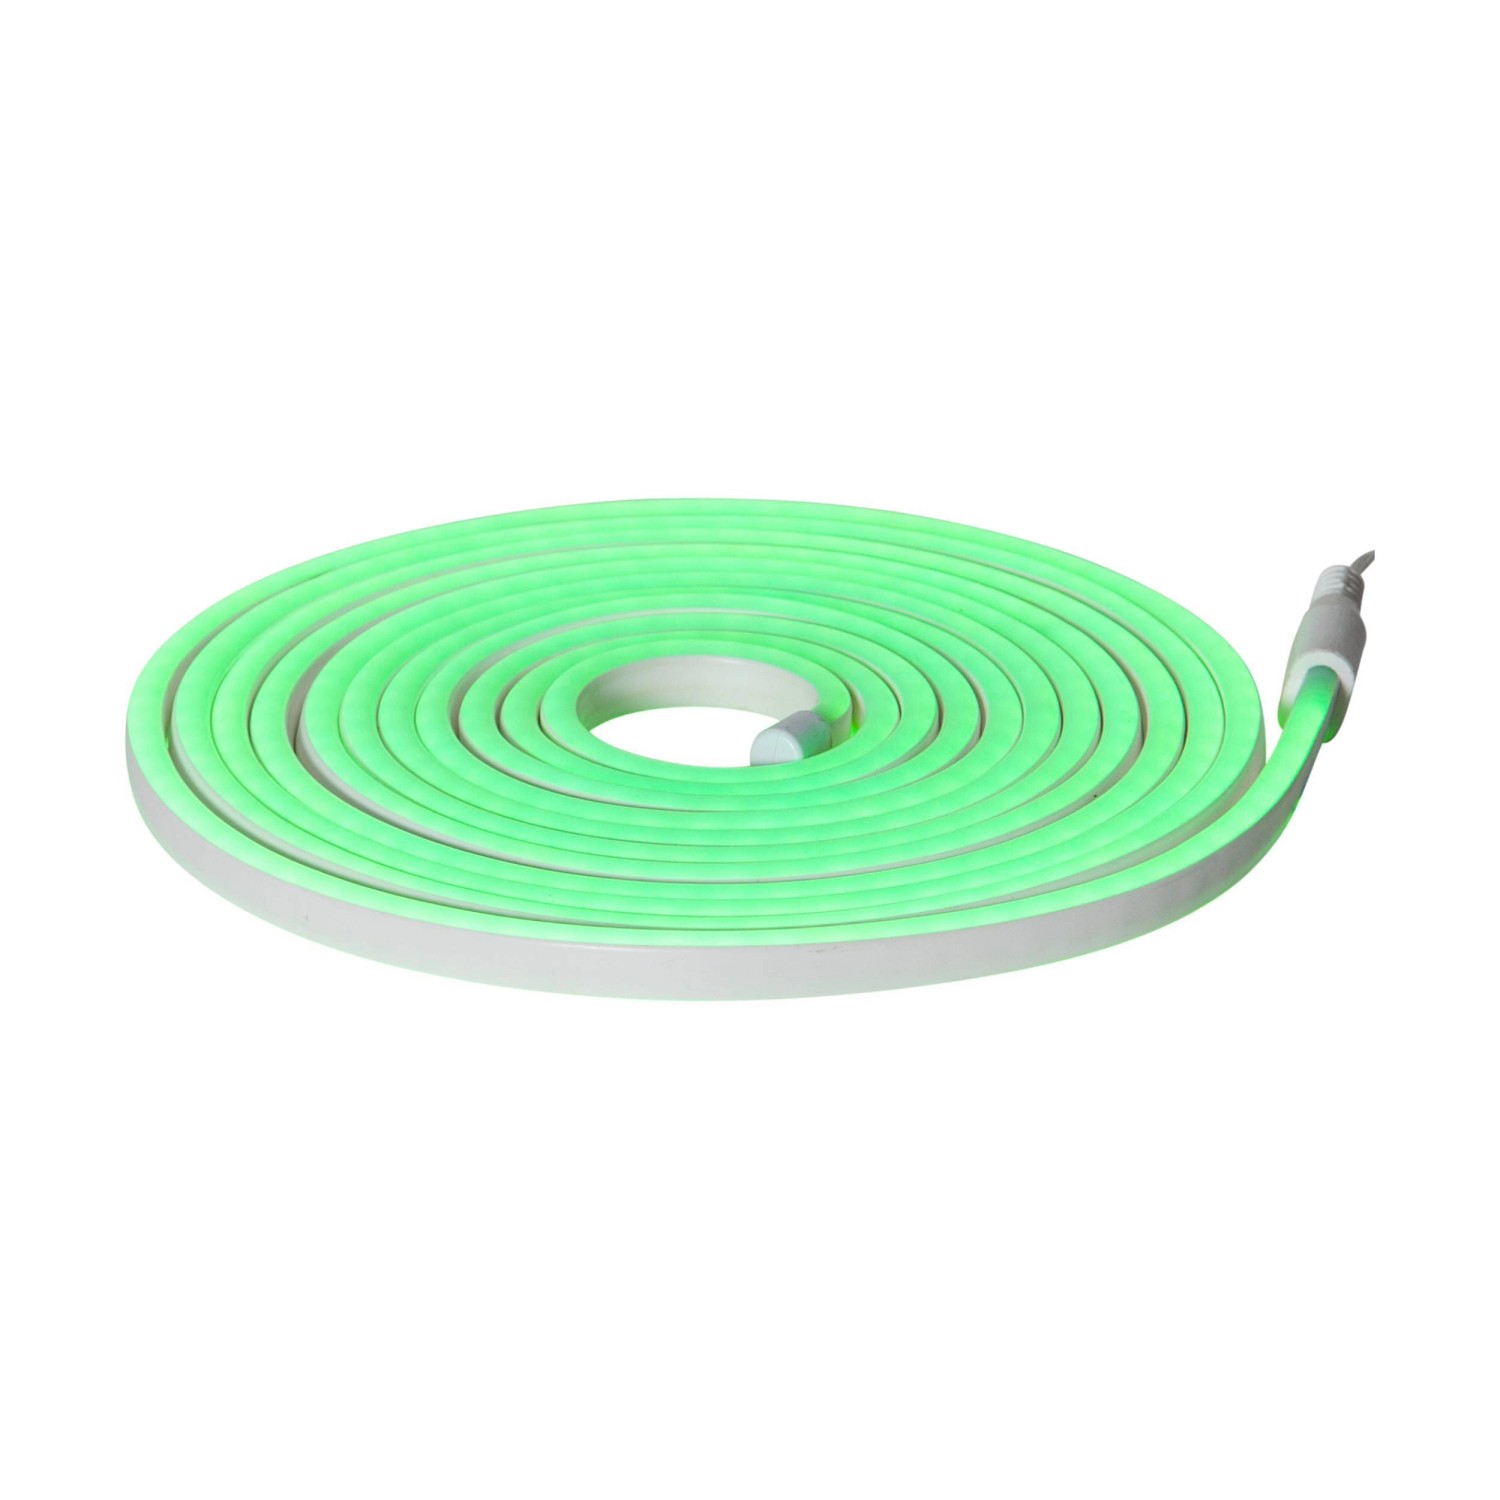 Eglo LED-Leuchtband Flatneonled Grün 500 cm